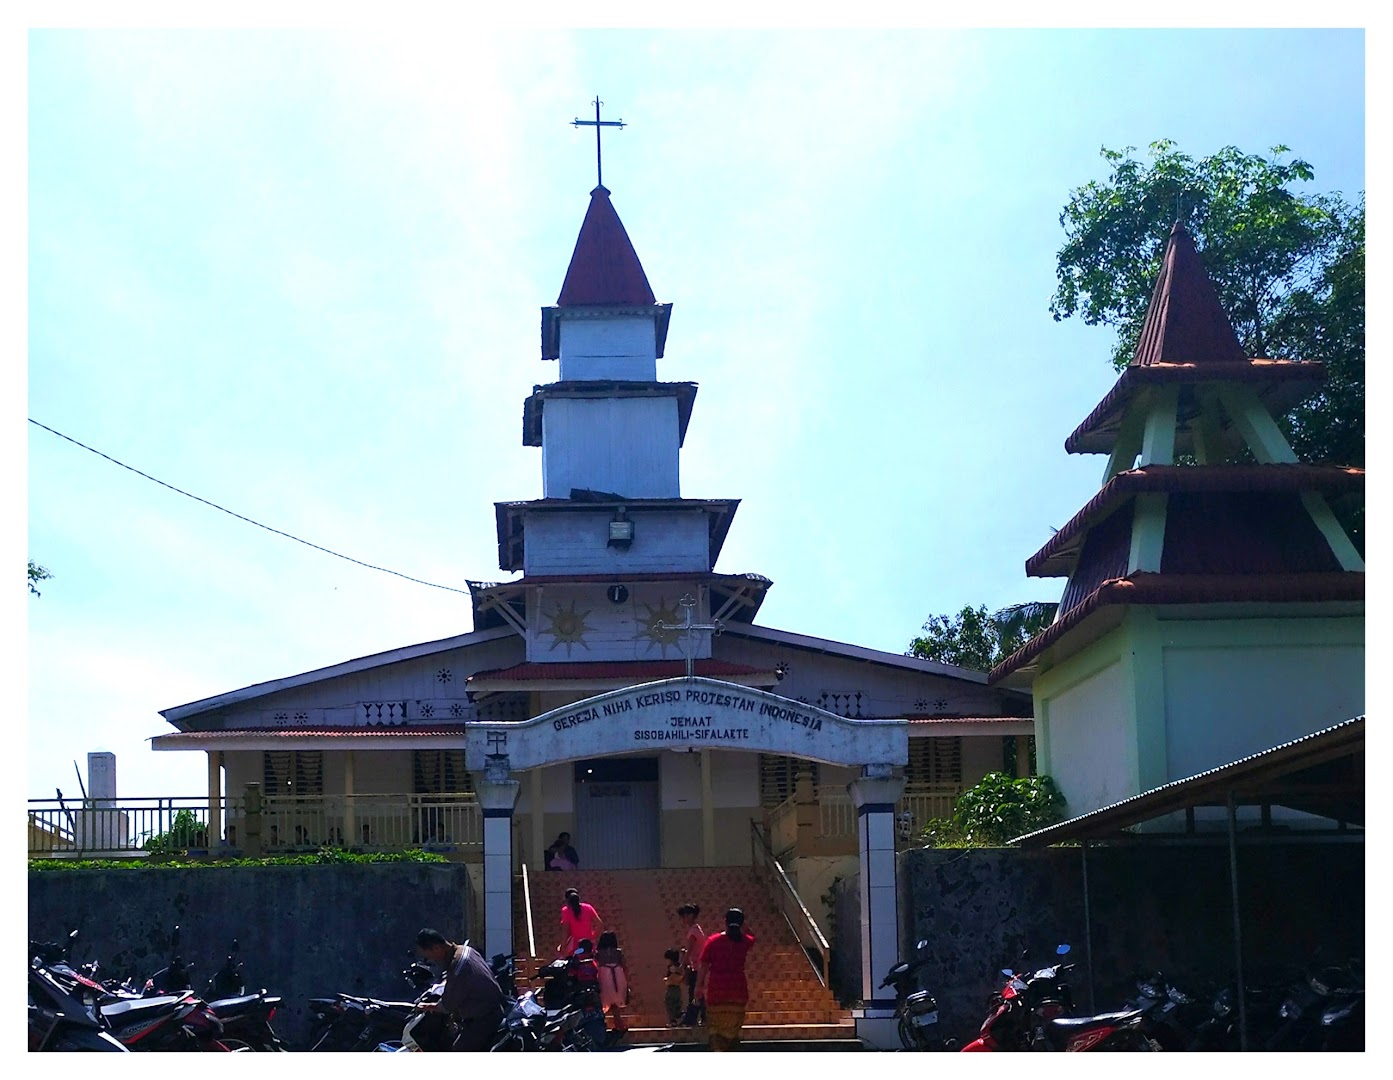 Gereja Niha Keriso Protestan Indonesia Jemaat Sisobahili Sifalaete Photo